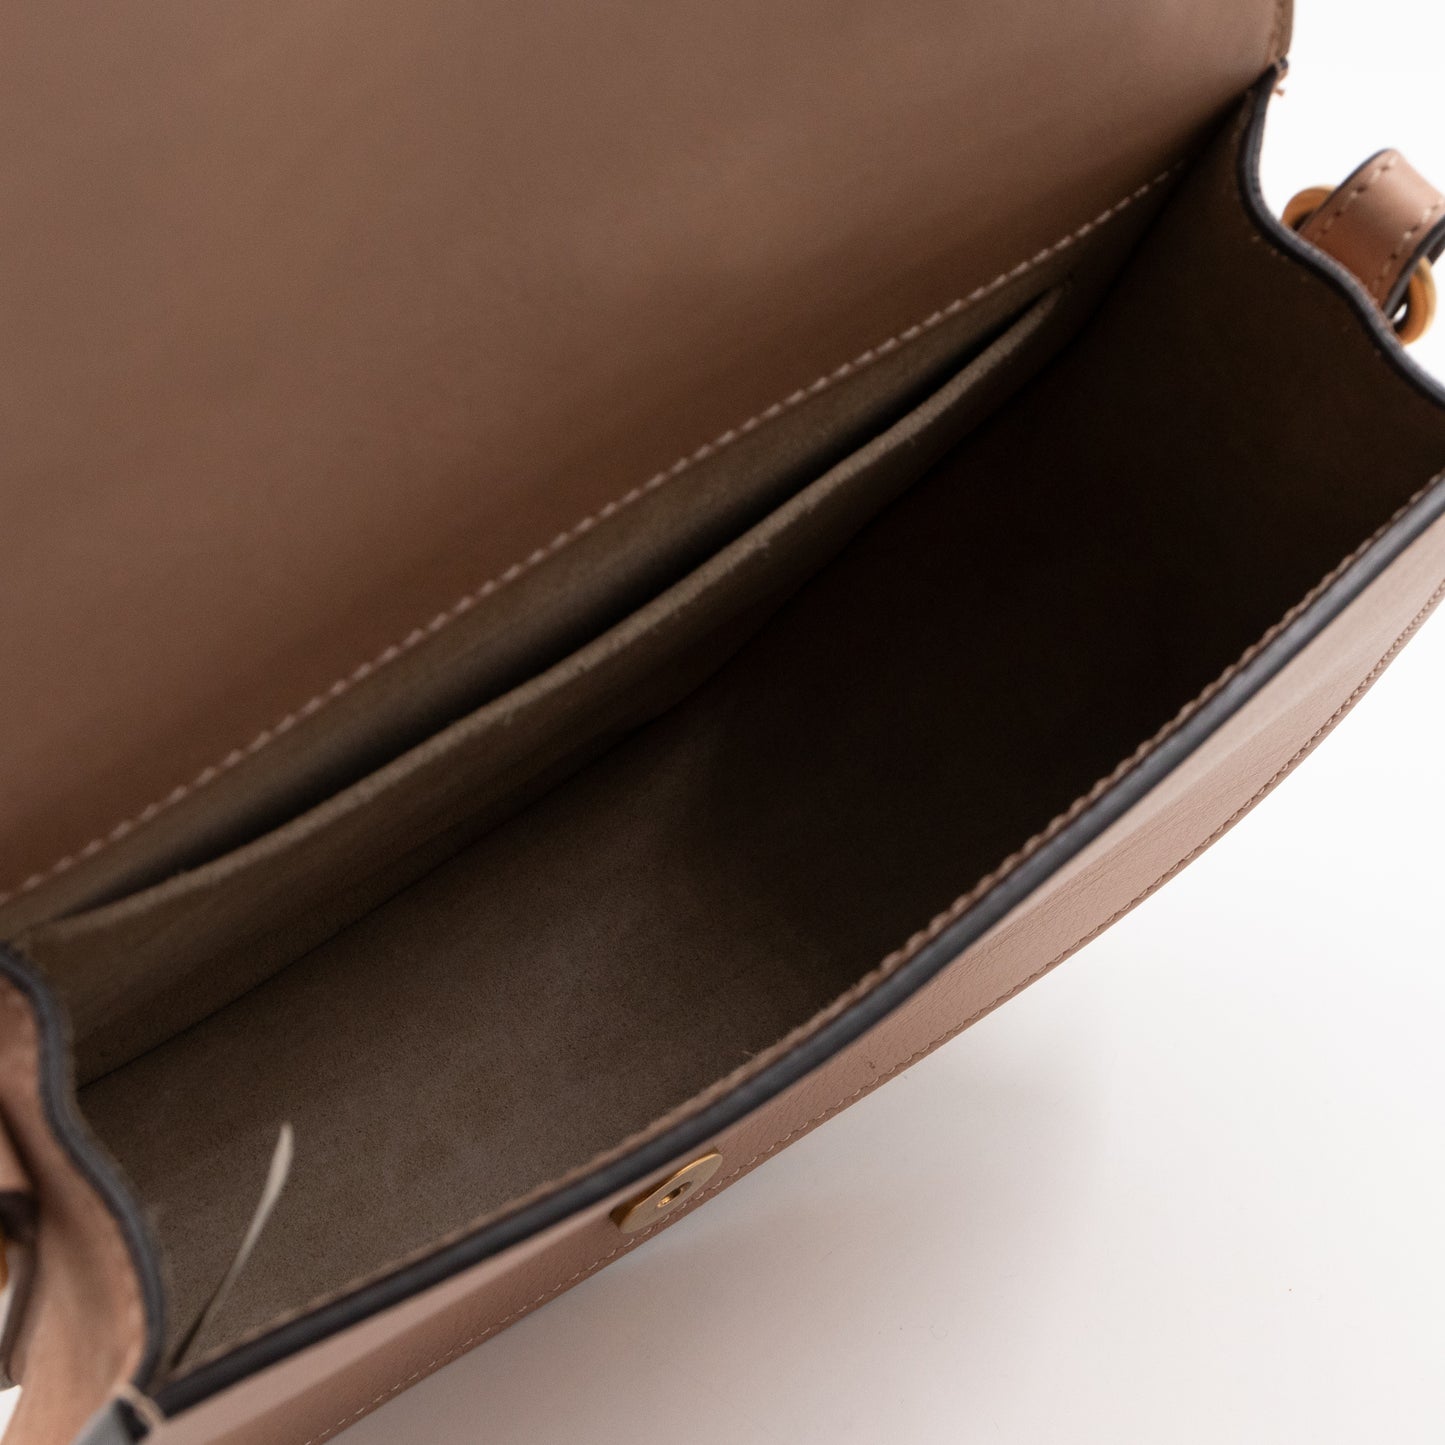 Nile Bracelet Bag Medium Beige Leather